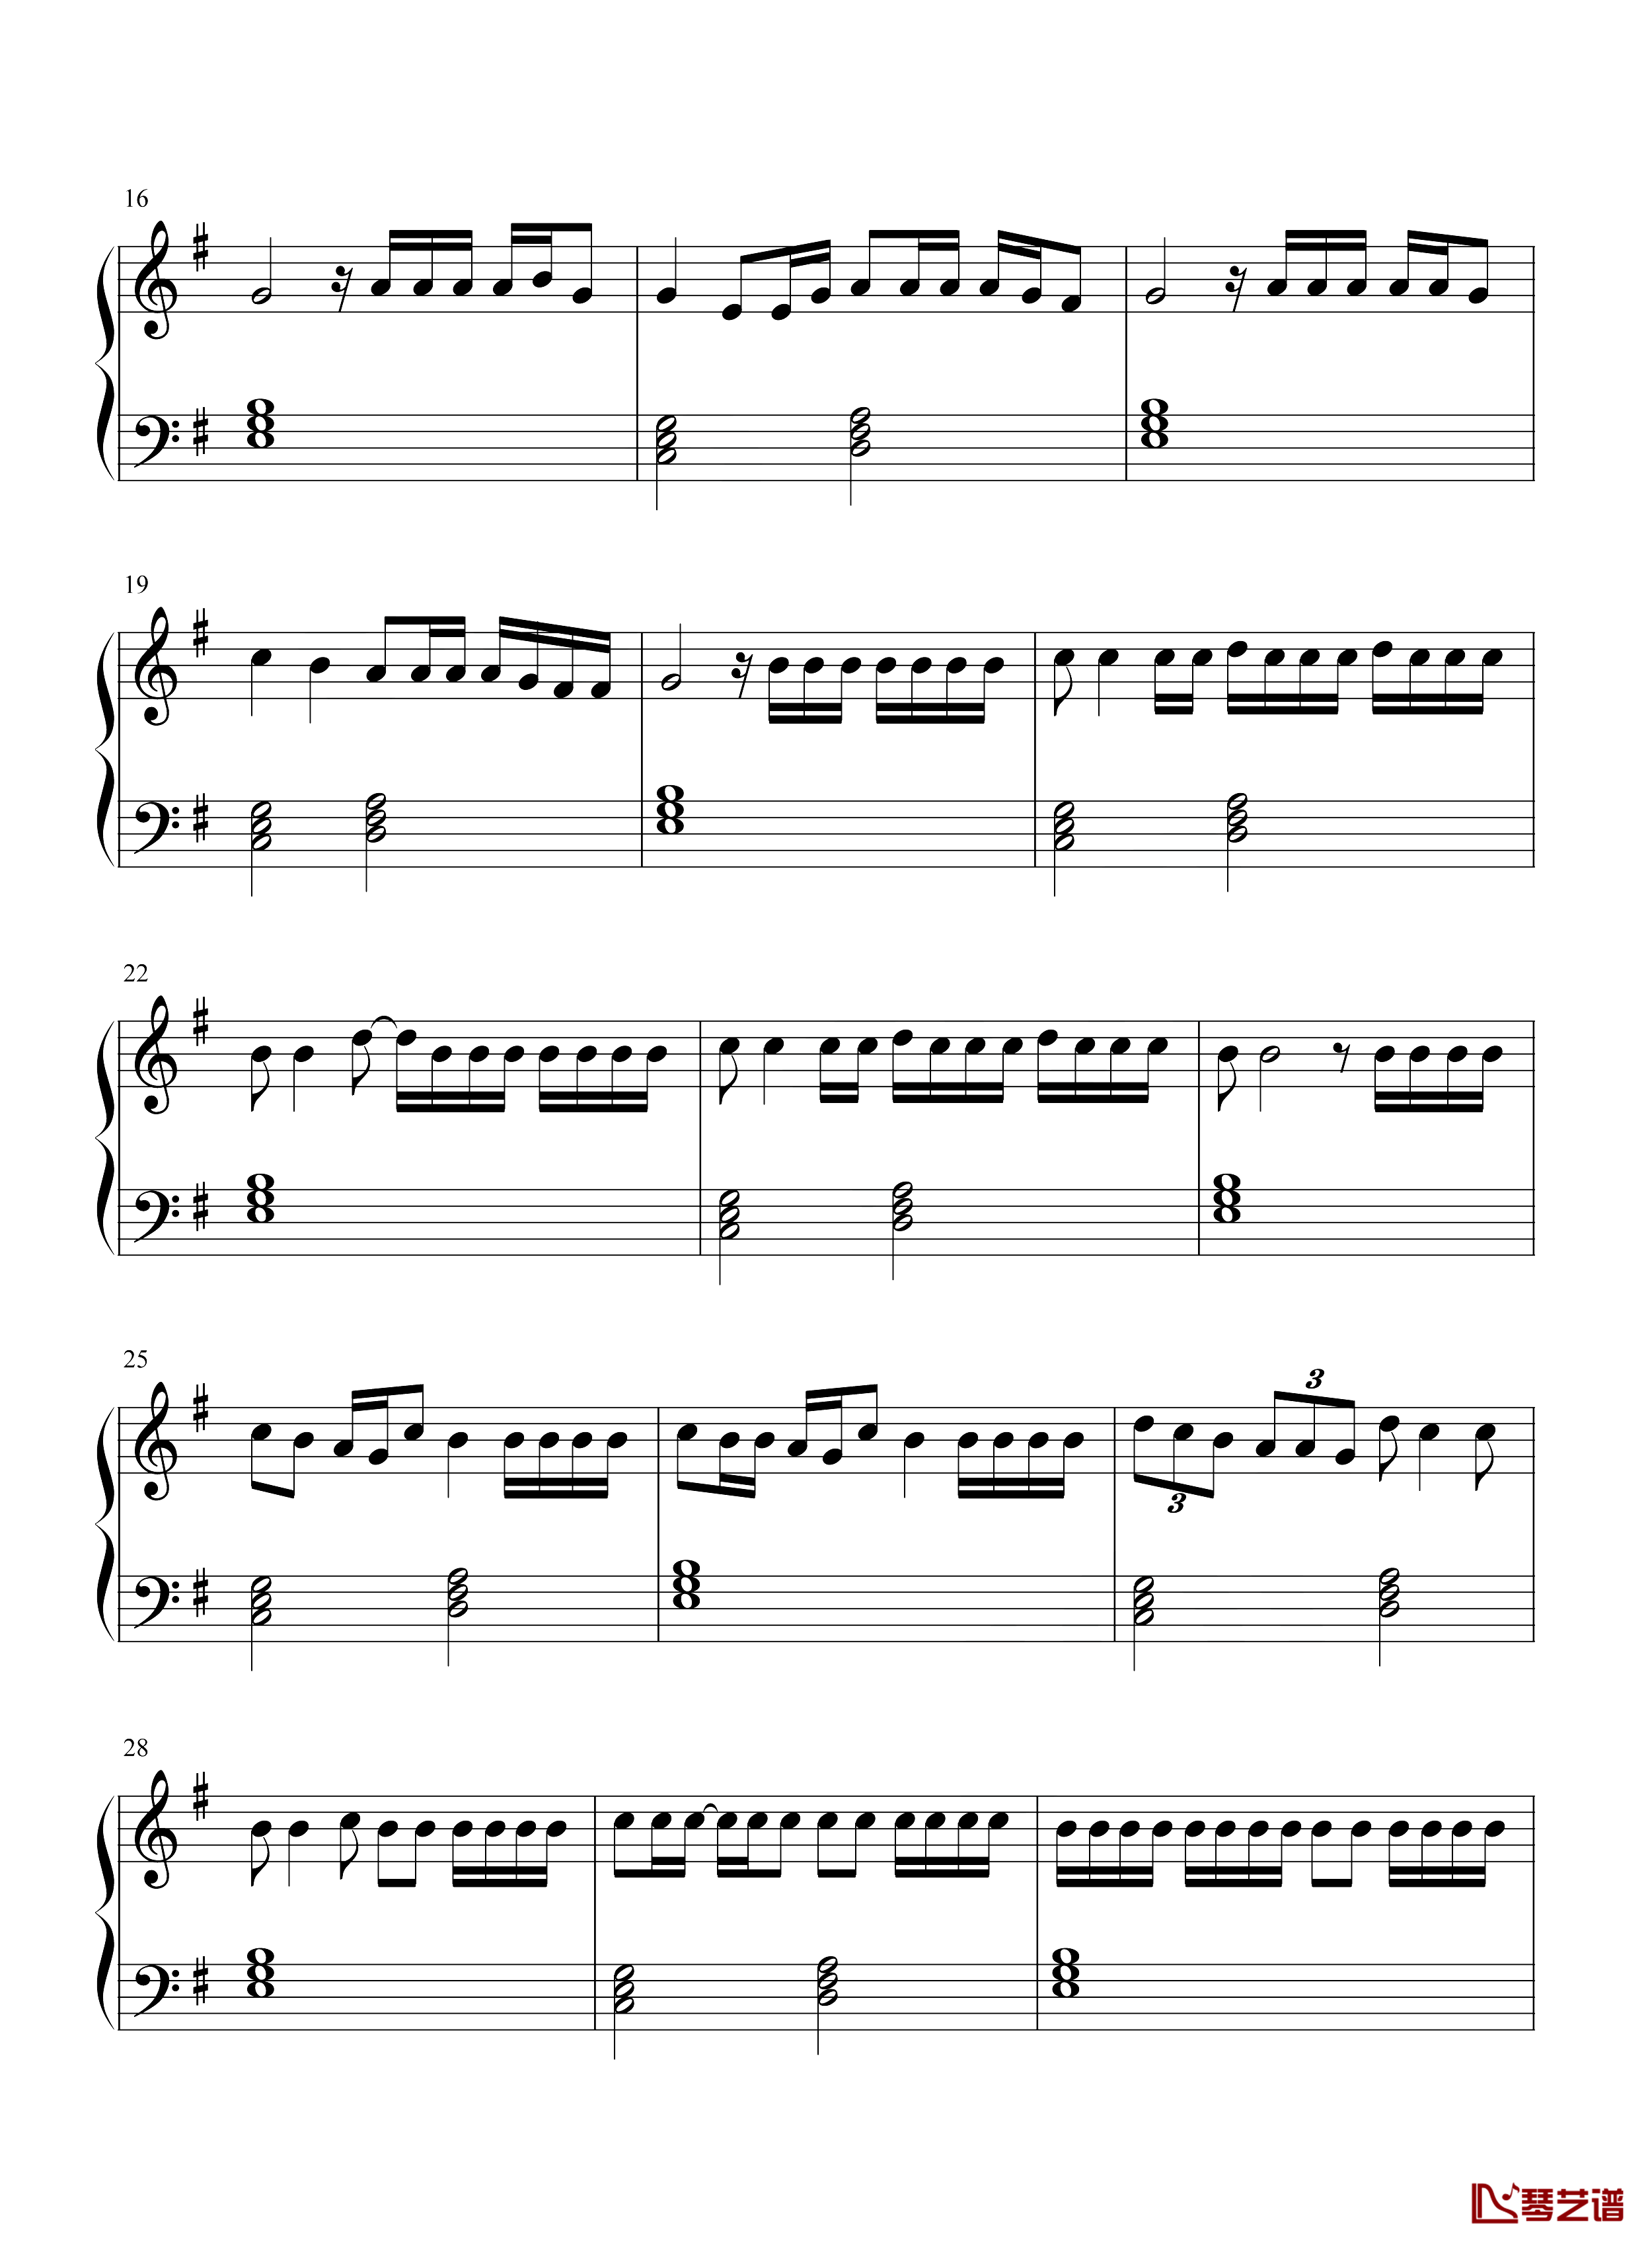 Envolver钢琴谱-Anitta-YouTube全球音乐榜前10名之一歌曲2